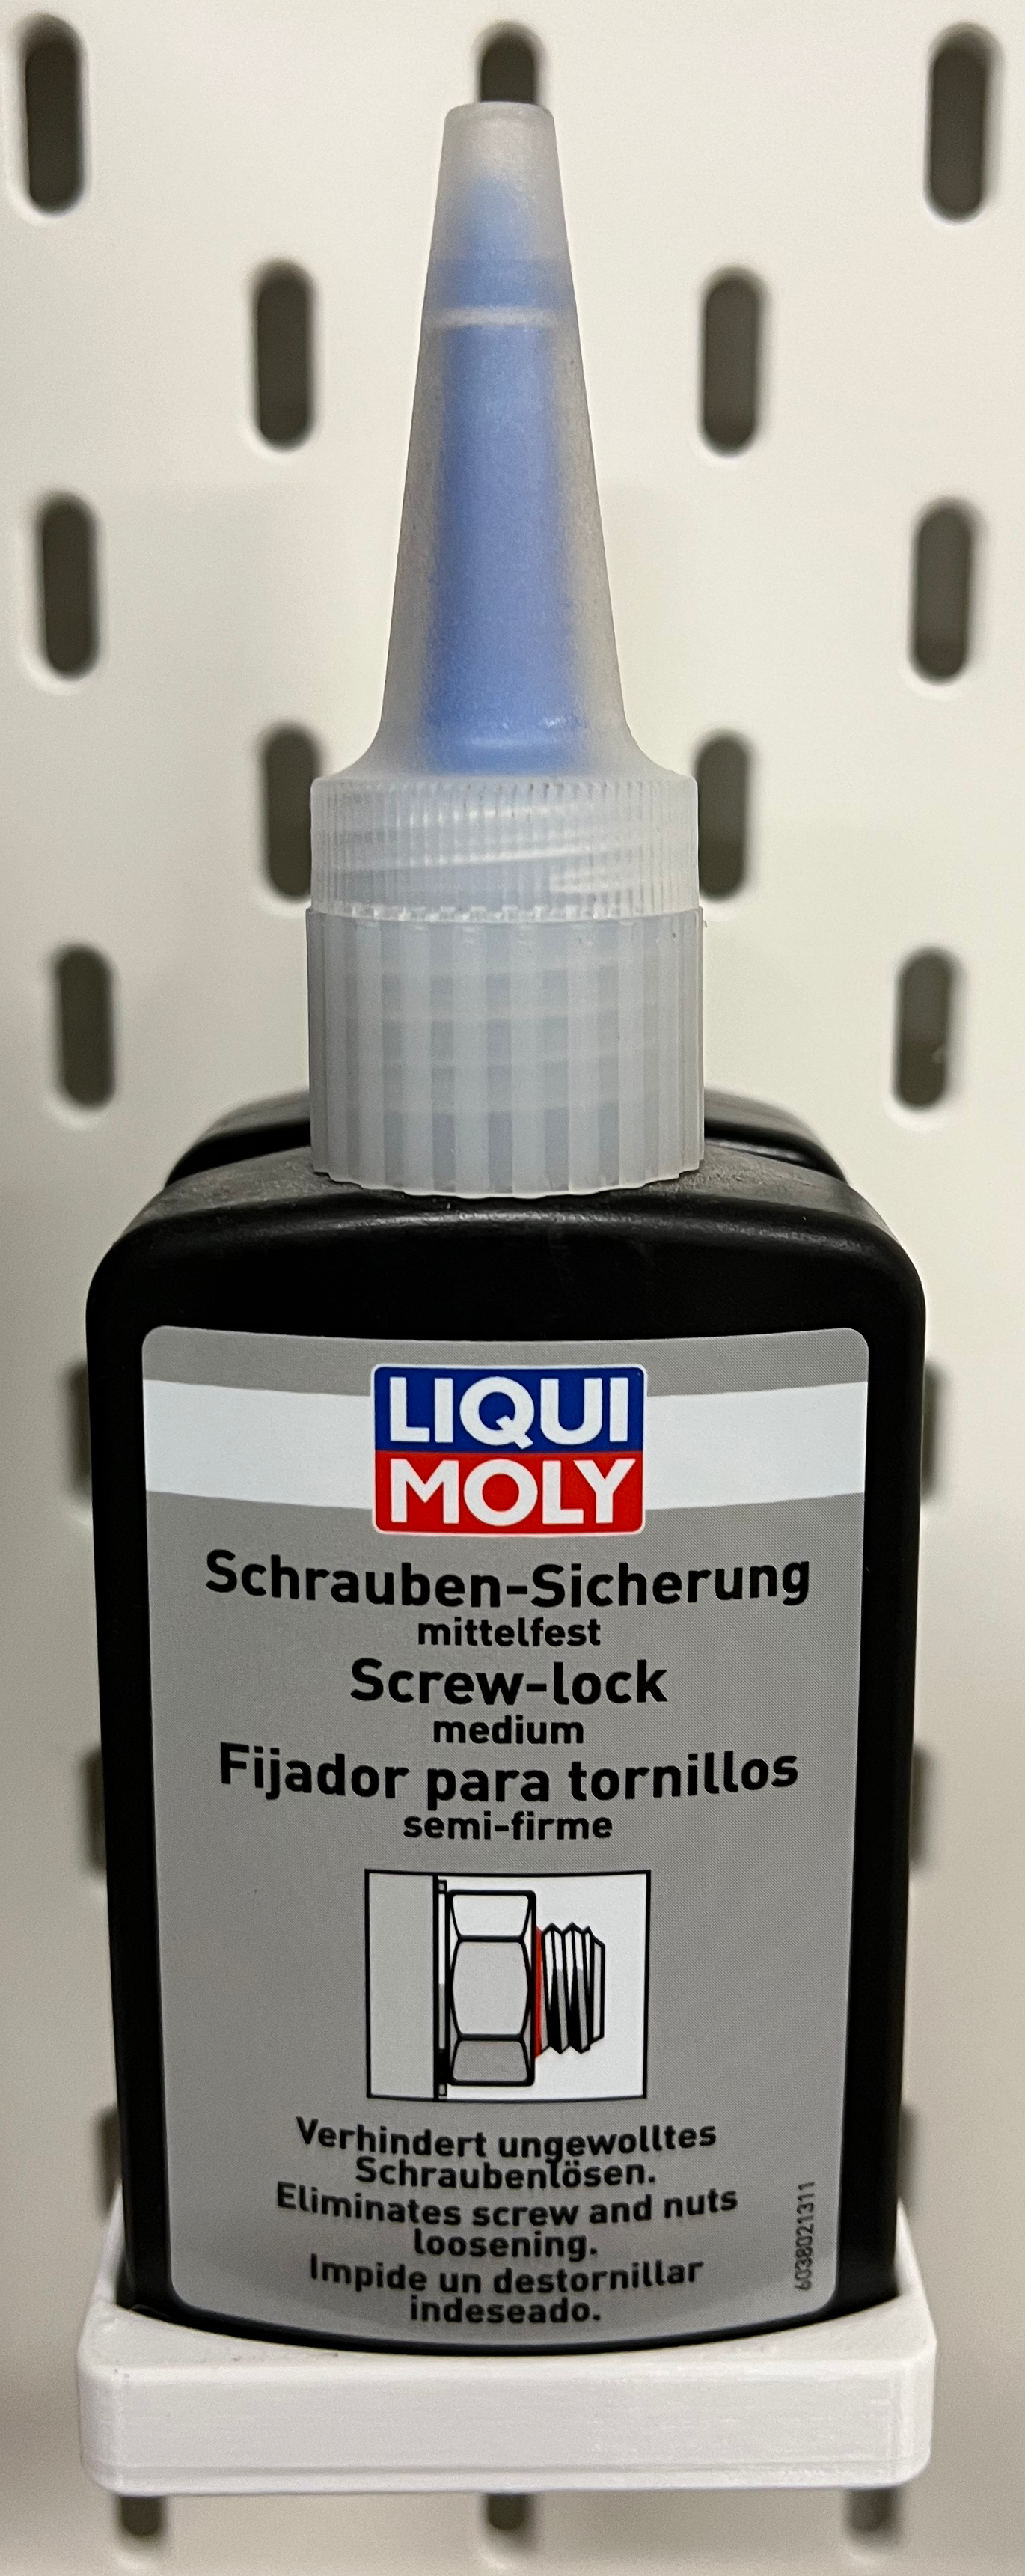 Skadis holder for Liqui Moly 50g adhesive bottles